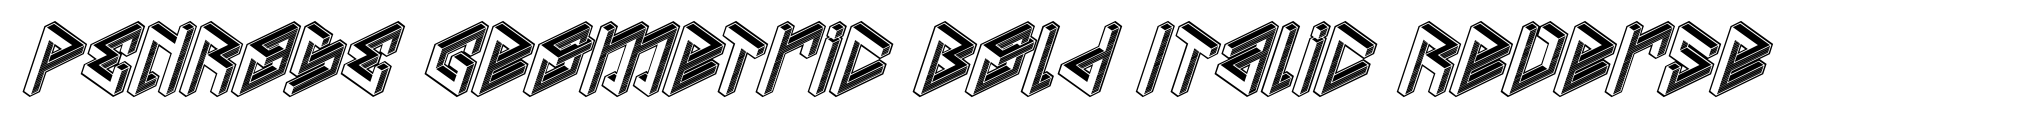 PENROSE Geometric Bold Italic Reverse image